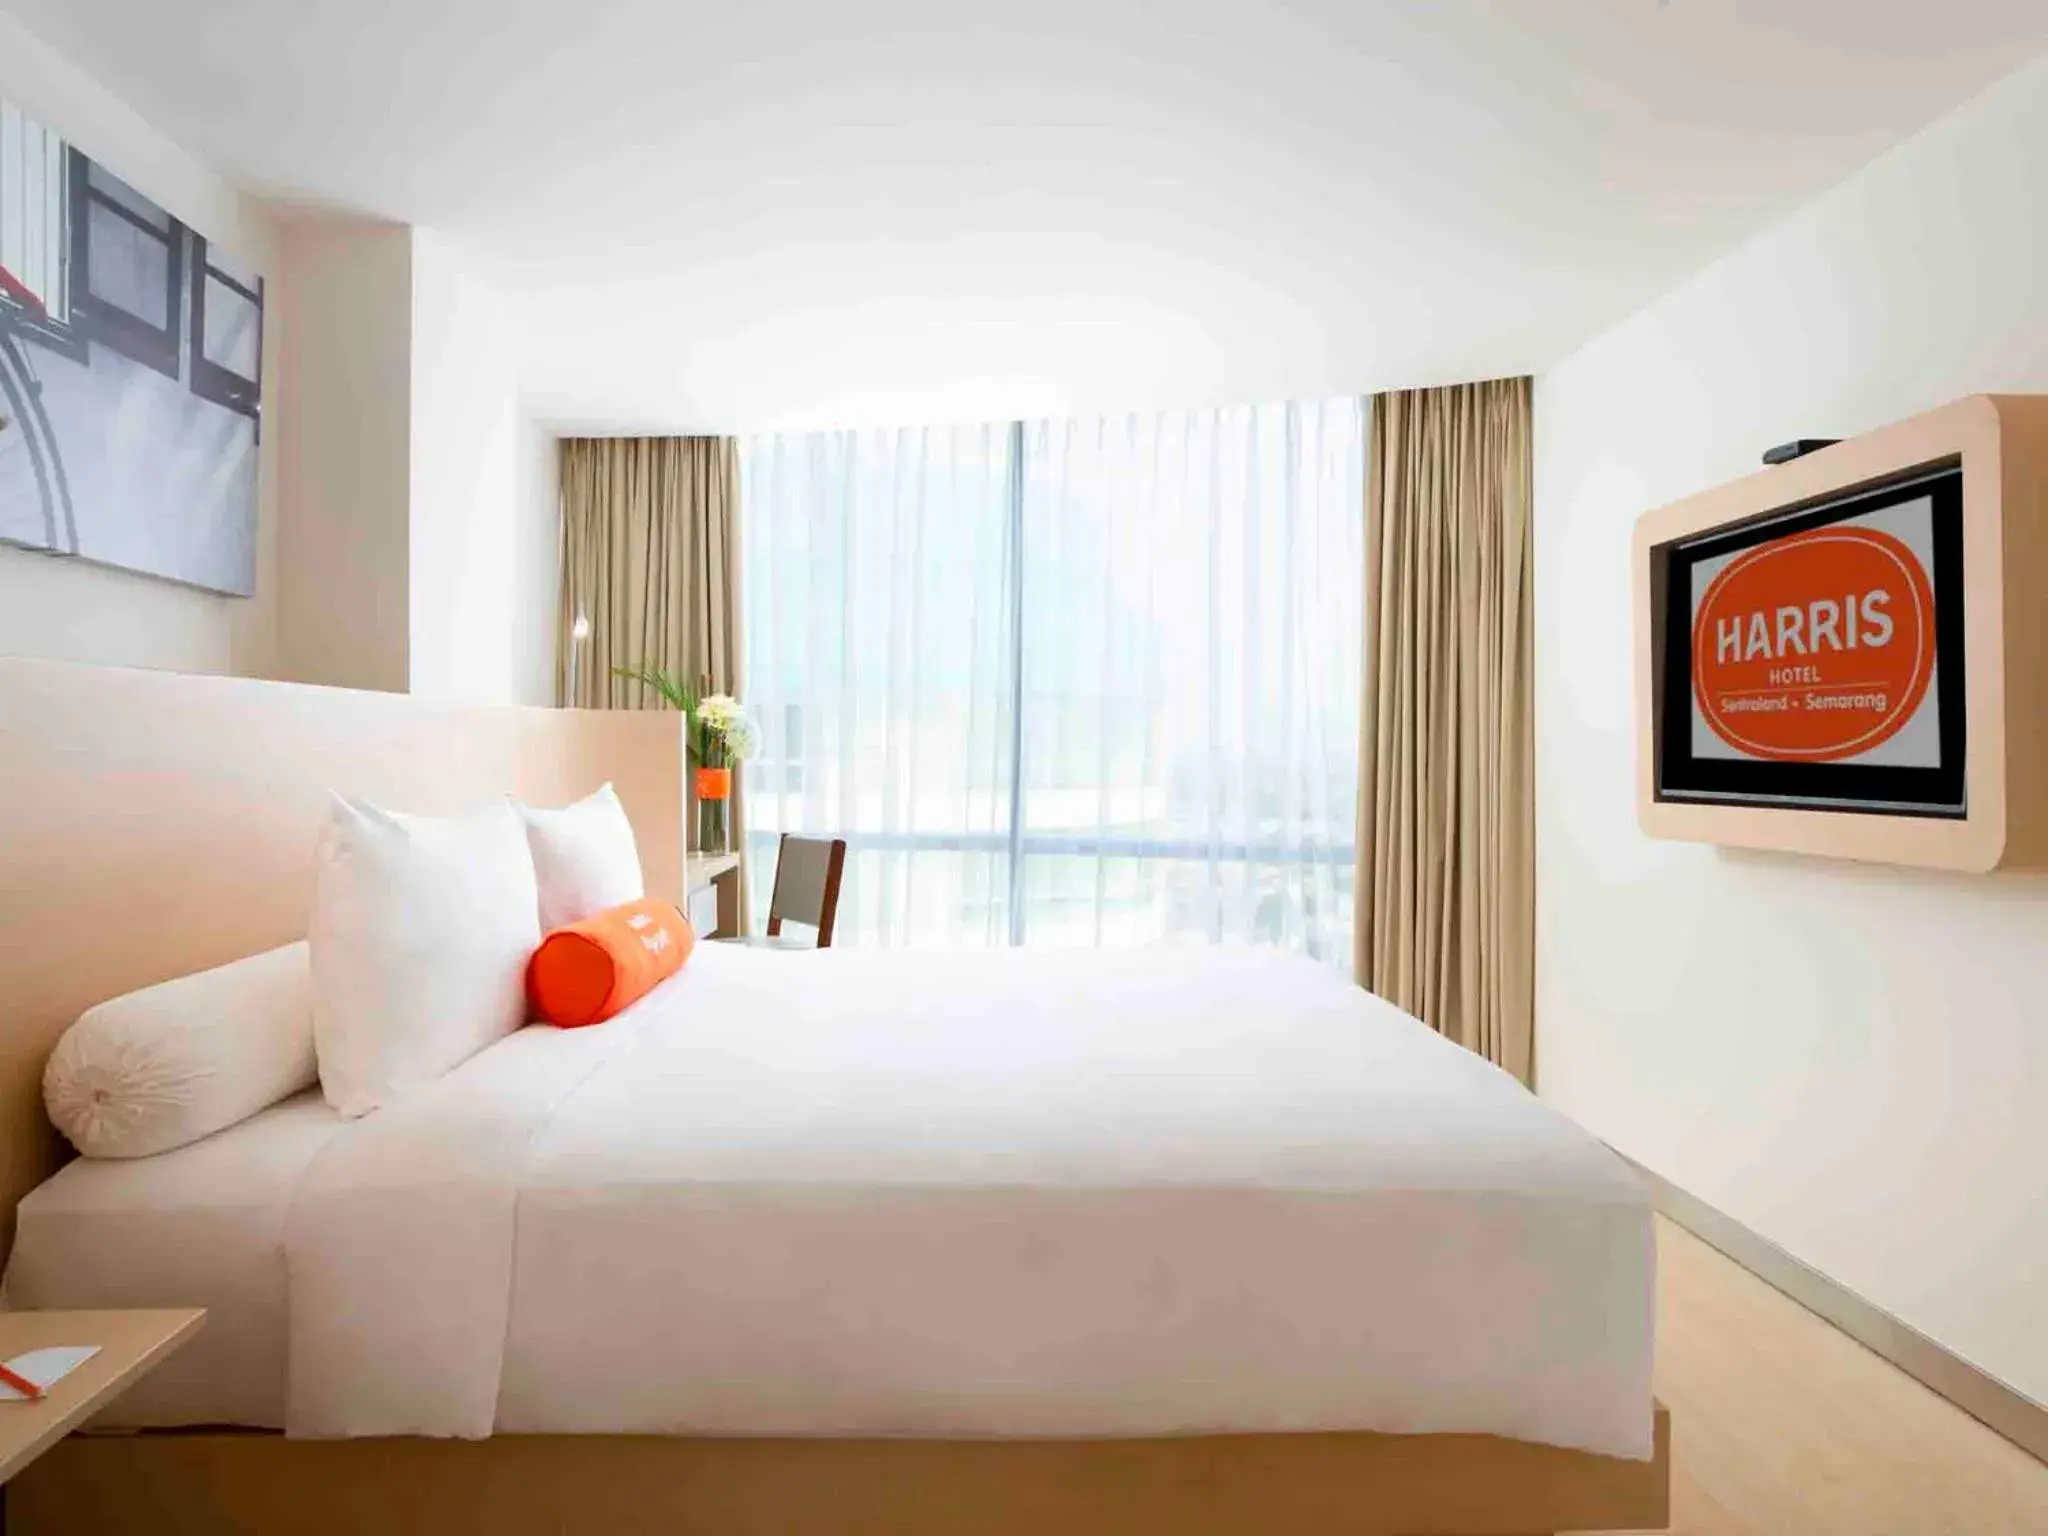 Bed in HARRIS Hotel Sentraland